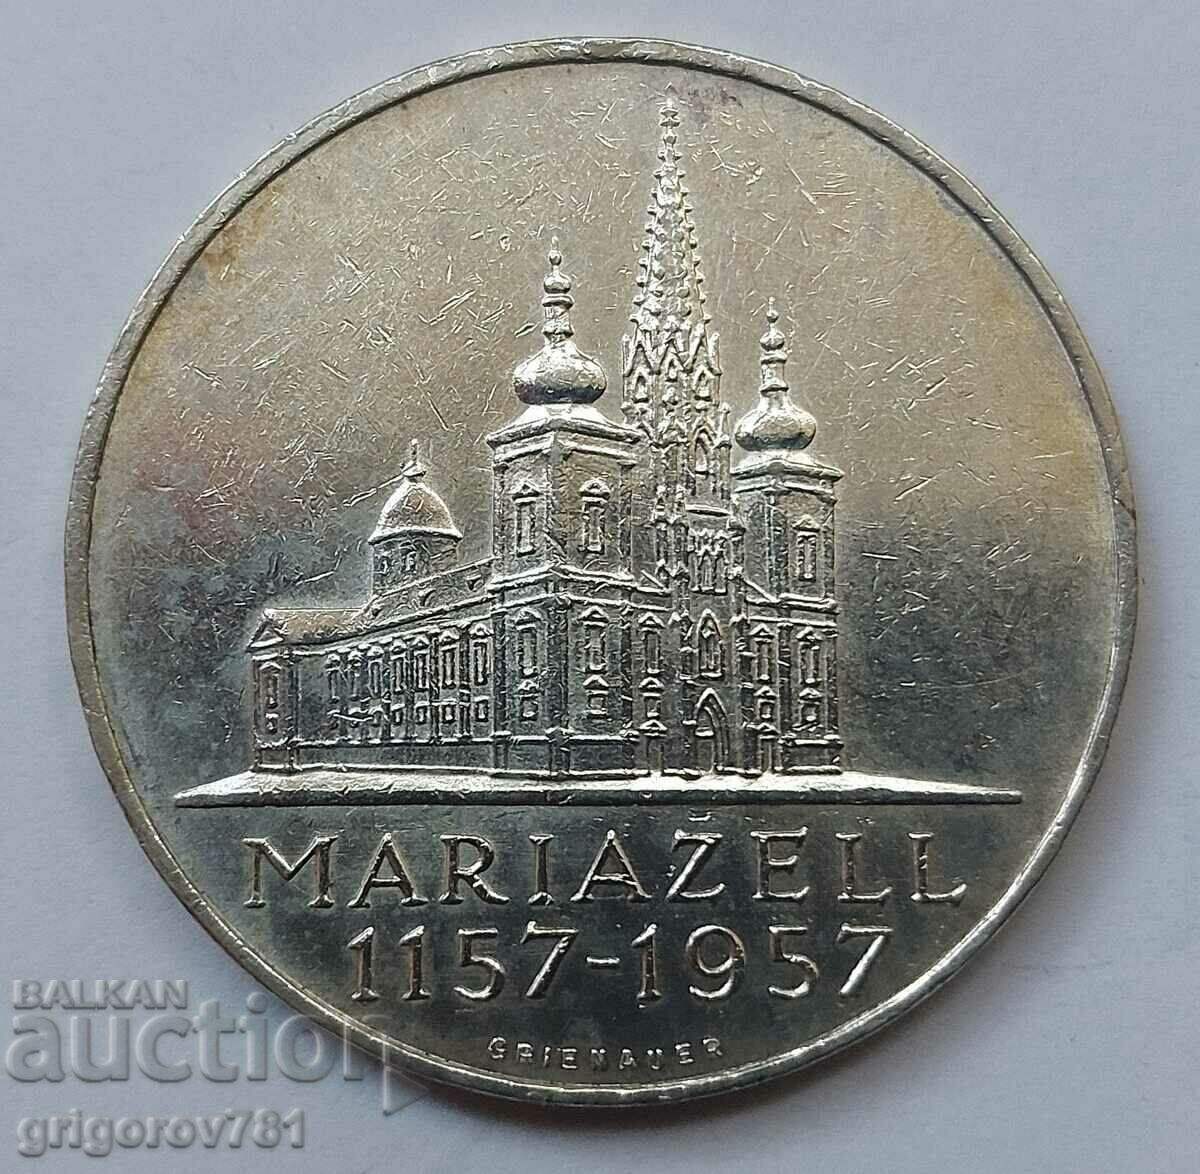 25 Shillings Silver Austria 1957 - Silver Coin #4